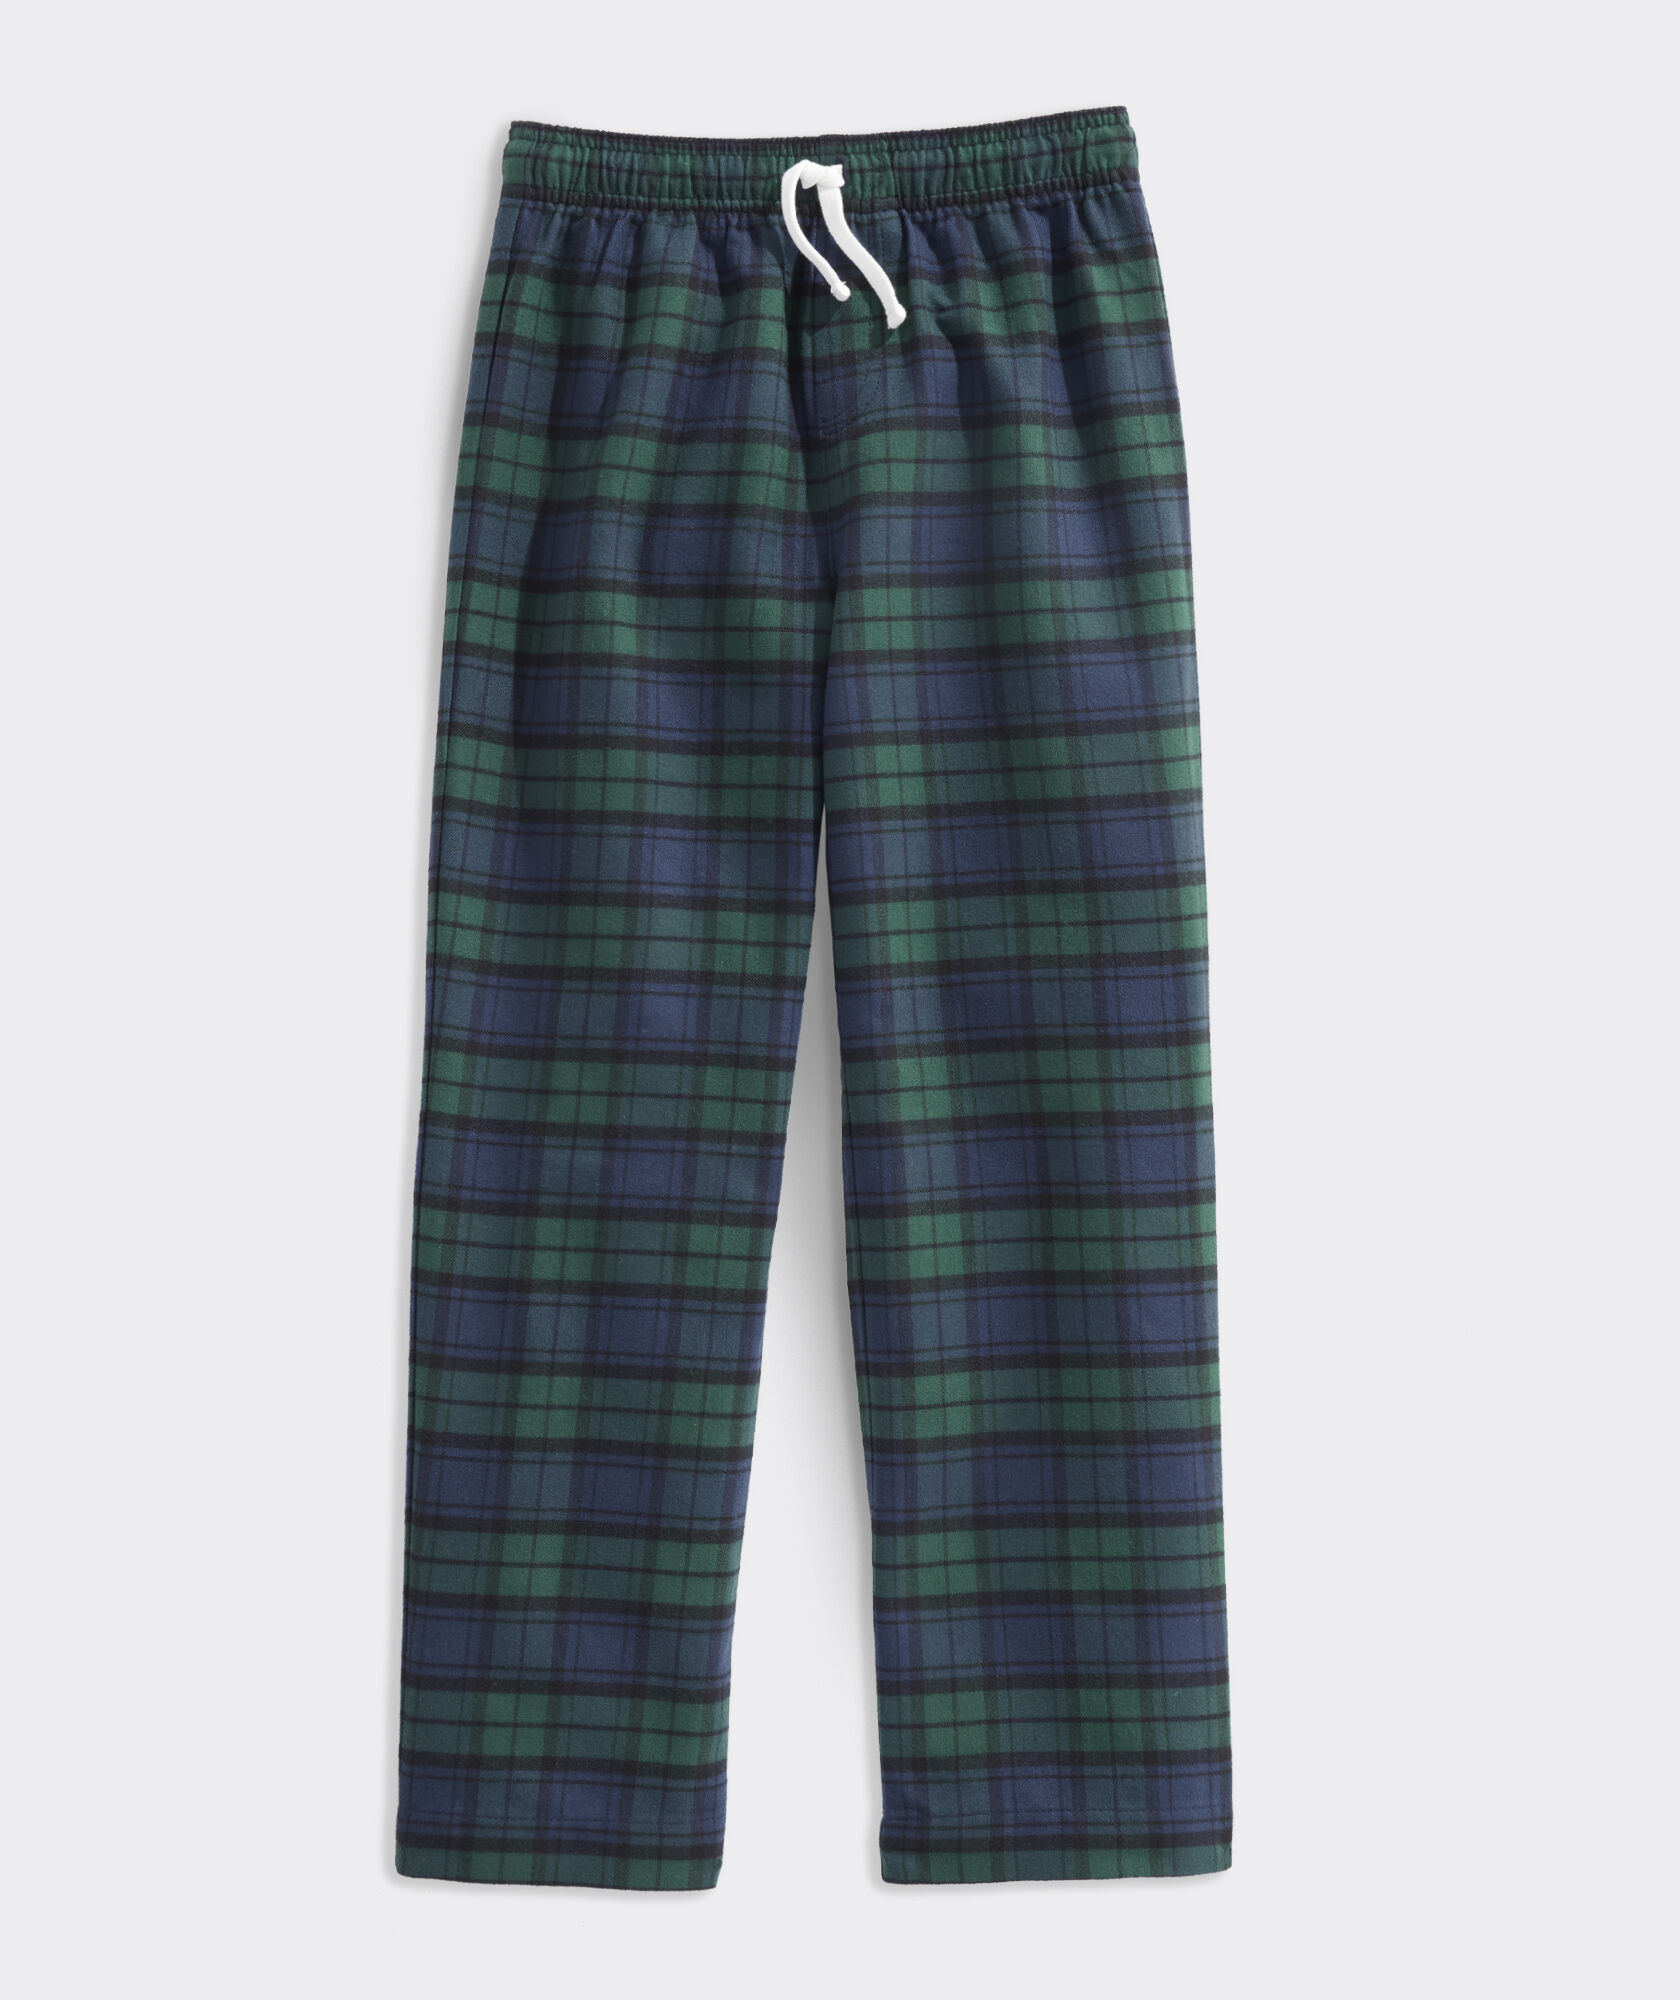 Harper Green Cotton Pajama Pants - One World Bazaar